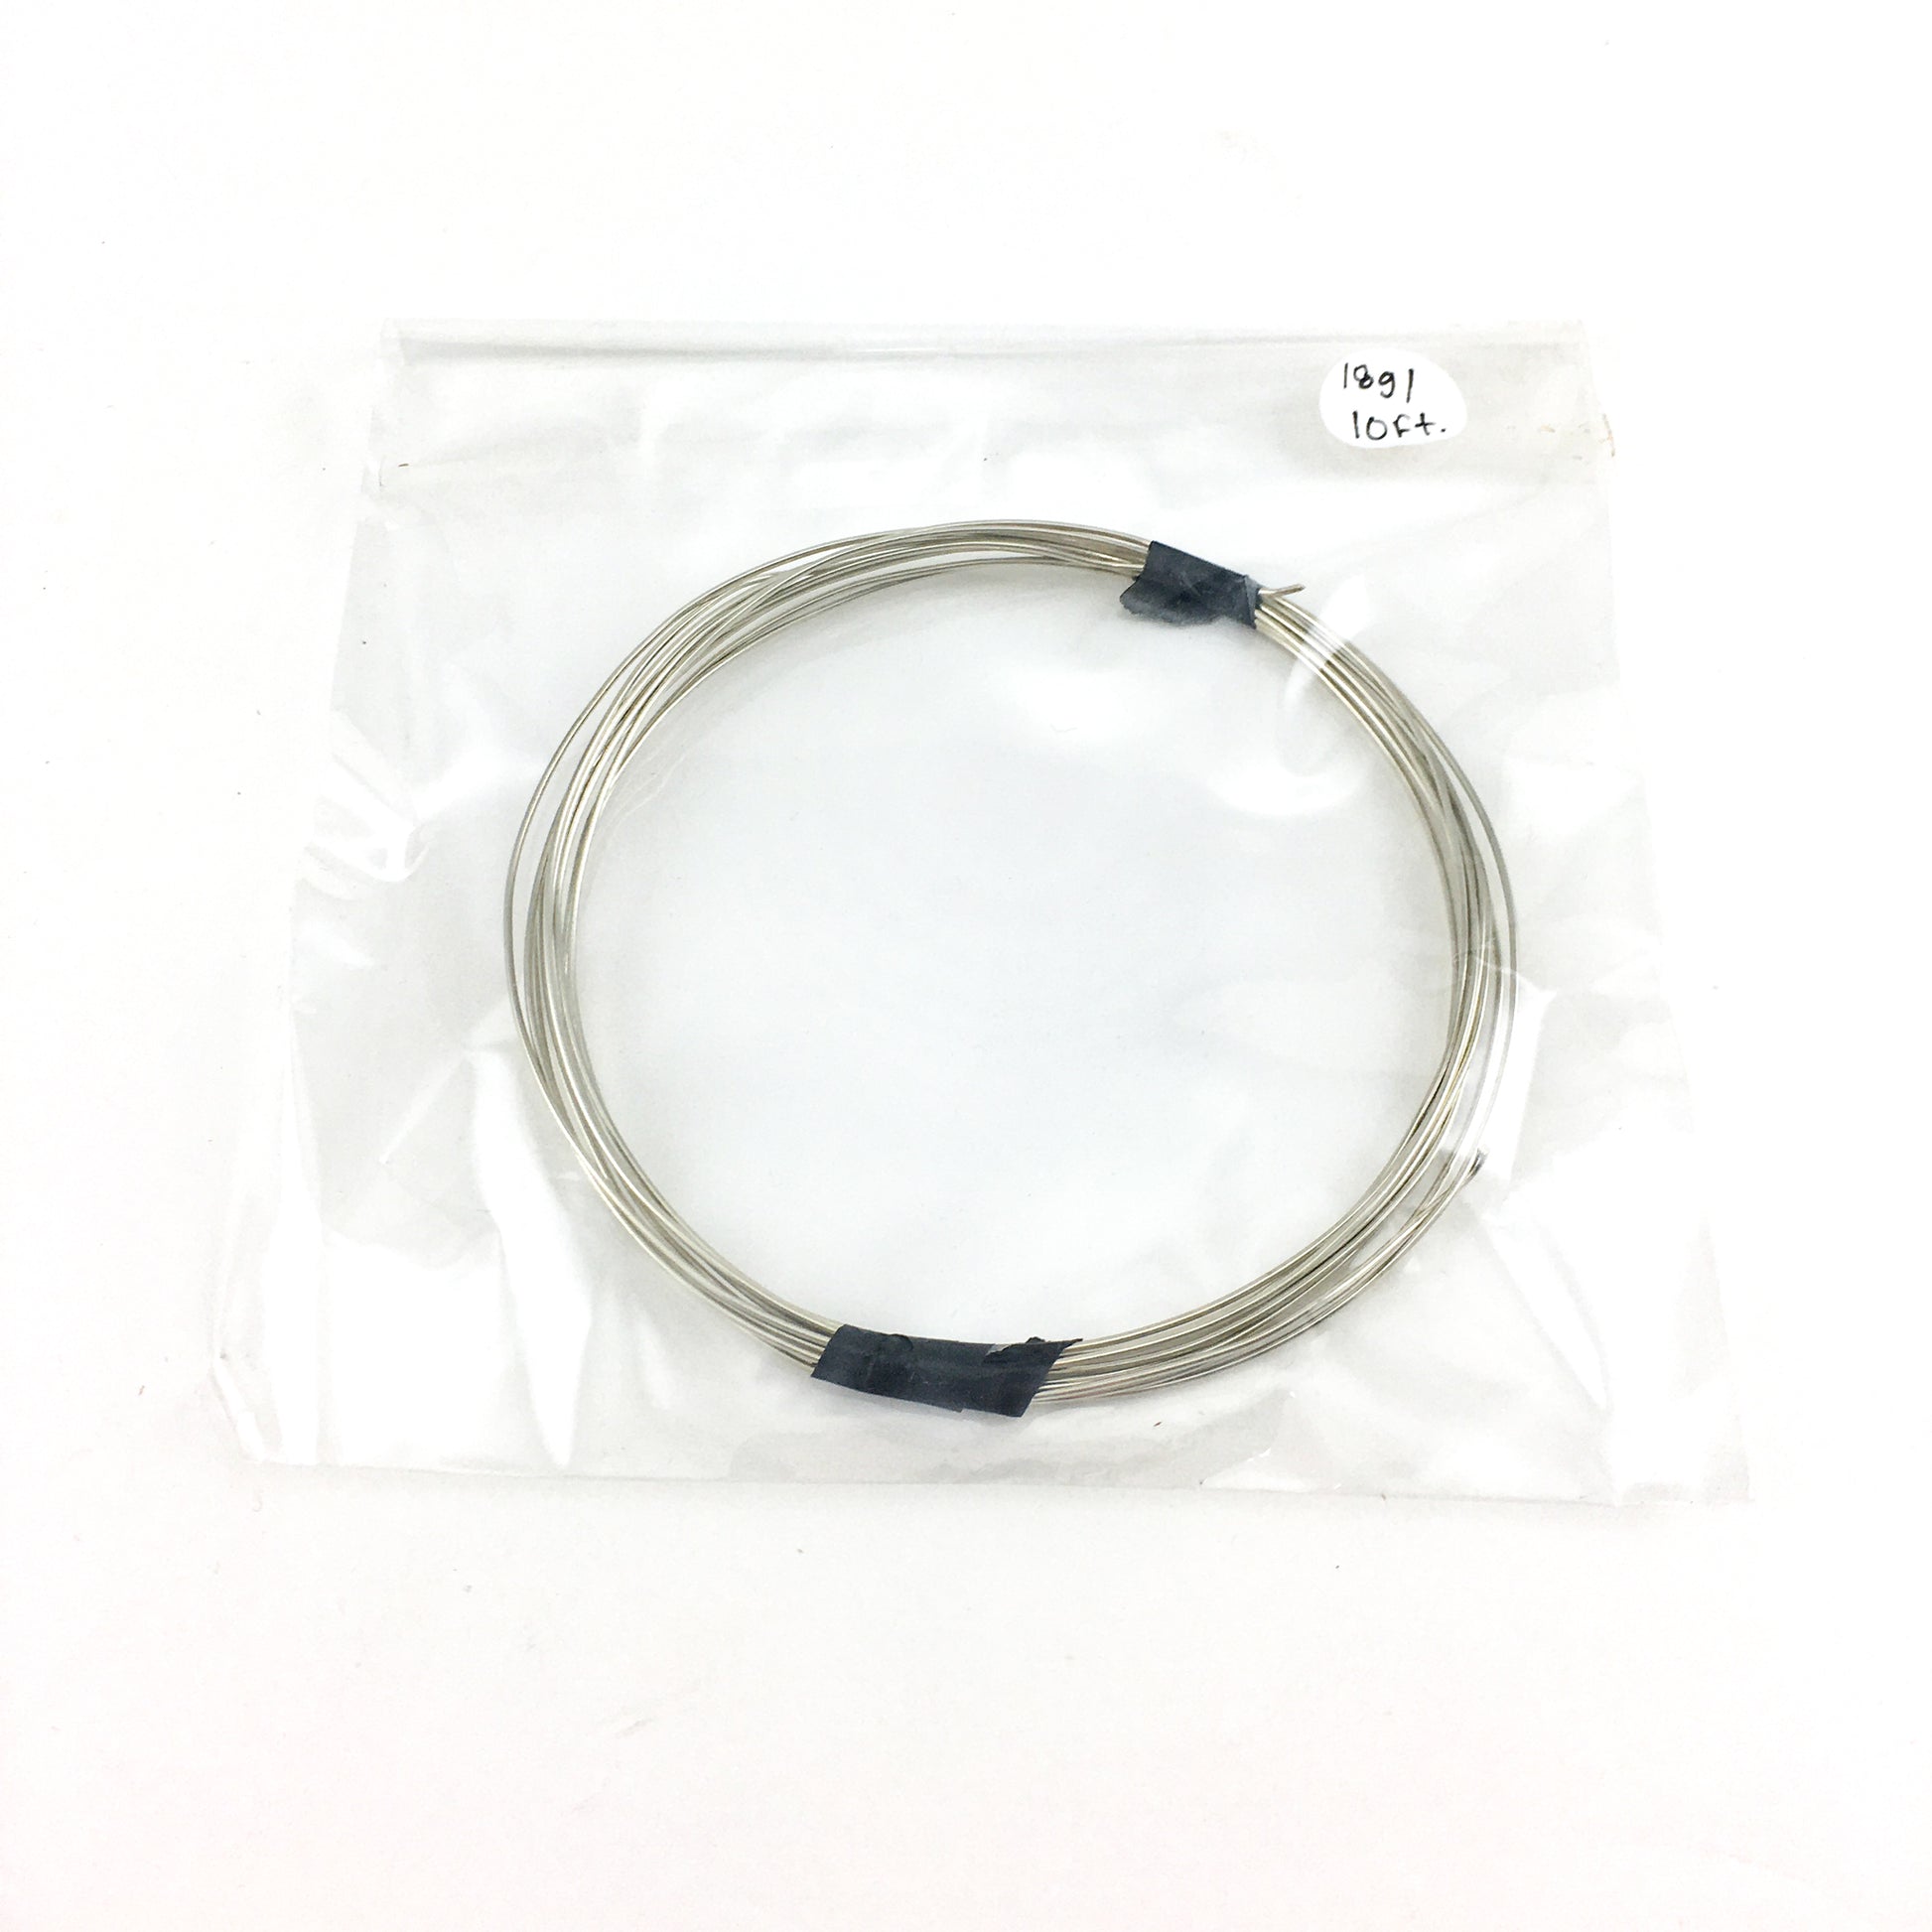 Round Nickel Silver Wire - Soft Temper a.k.a. Dead Soft - 10 ft. - 18g by Contenti - K. A. Artist Shop